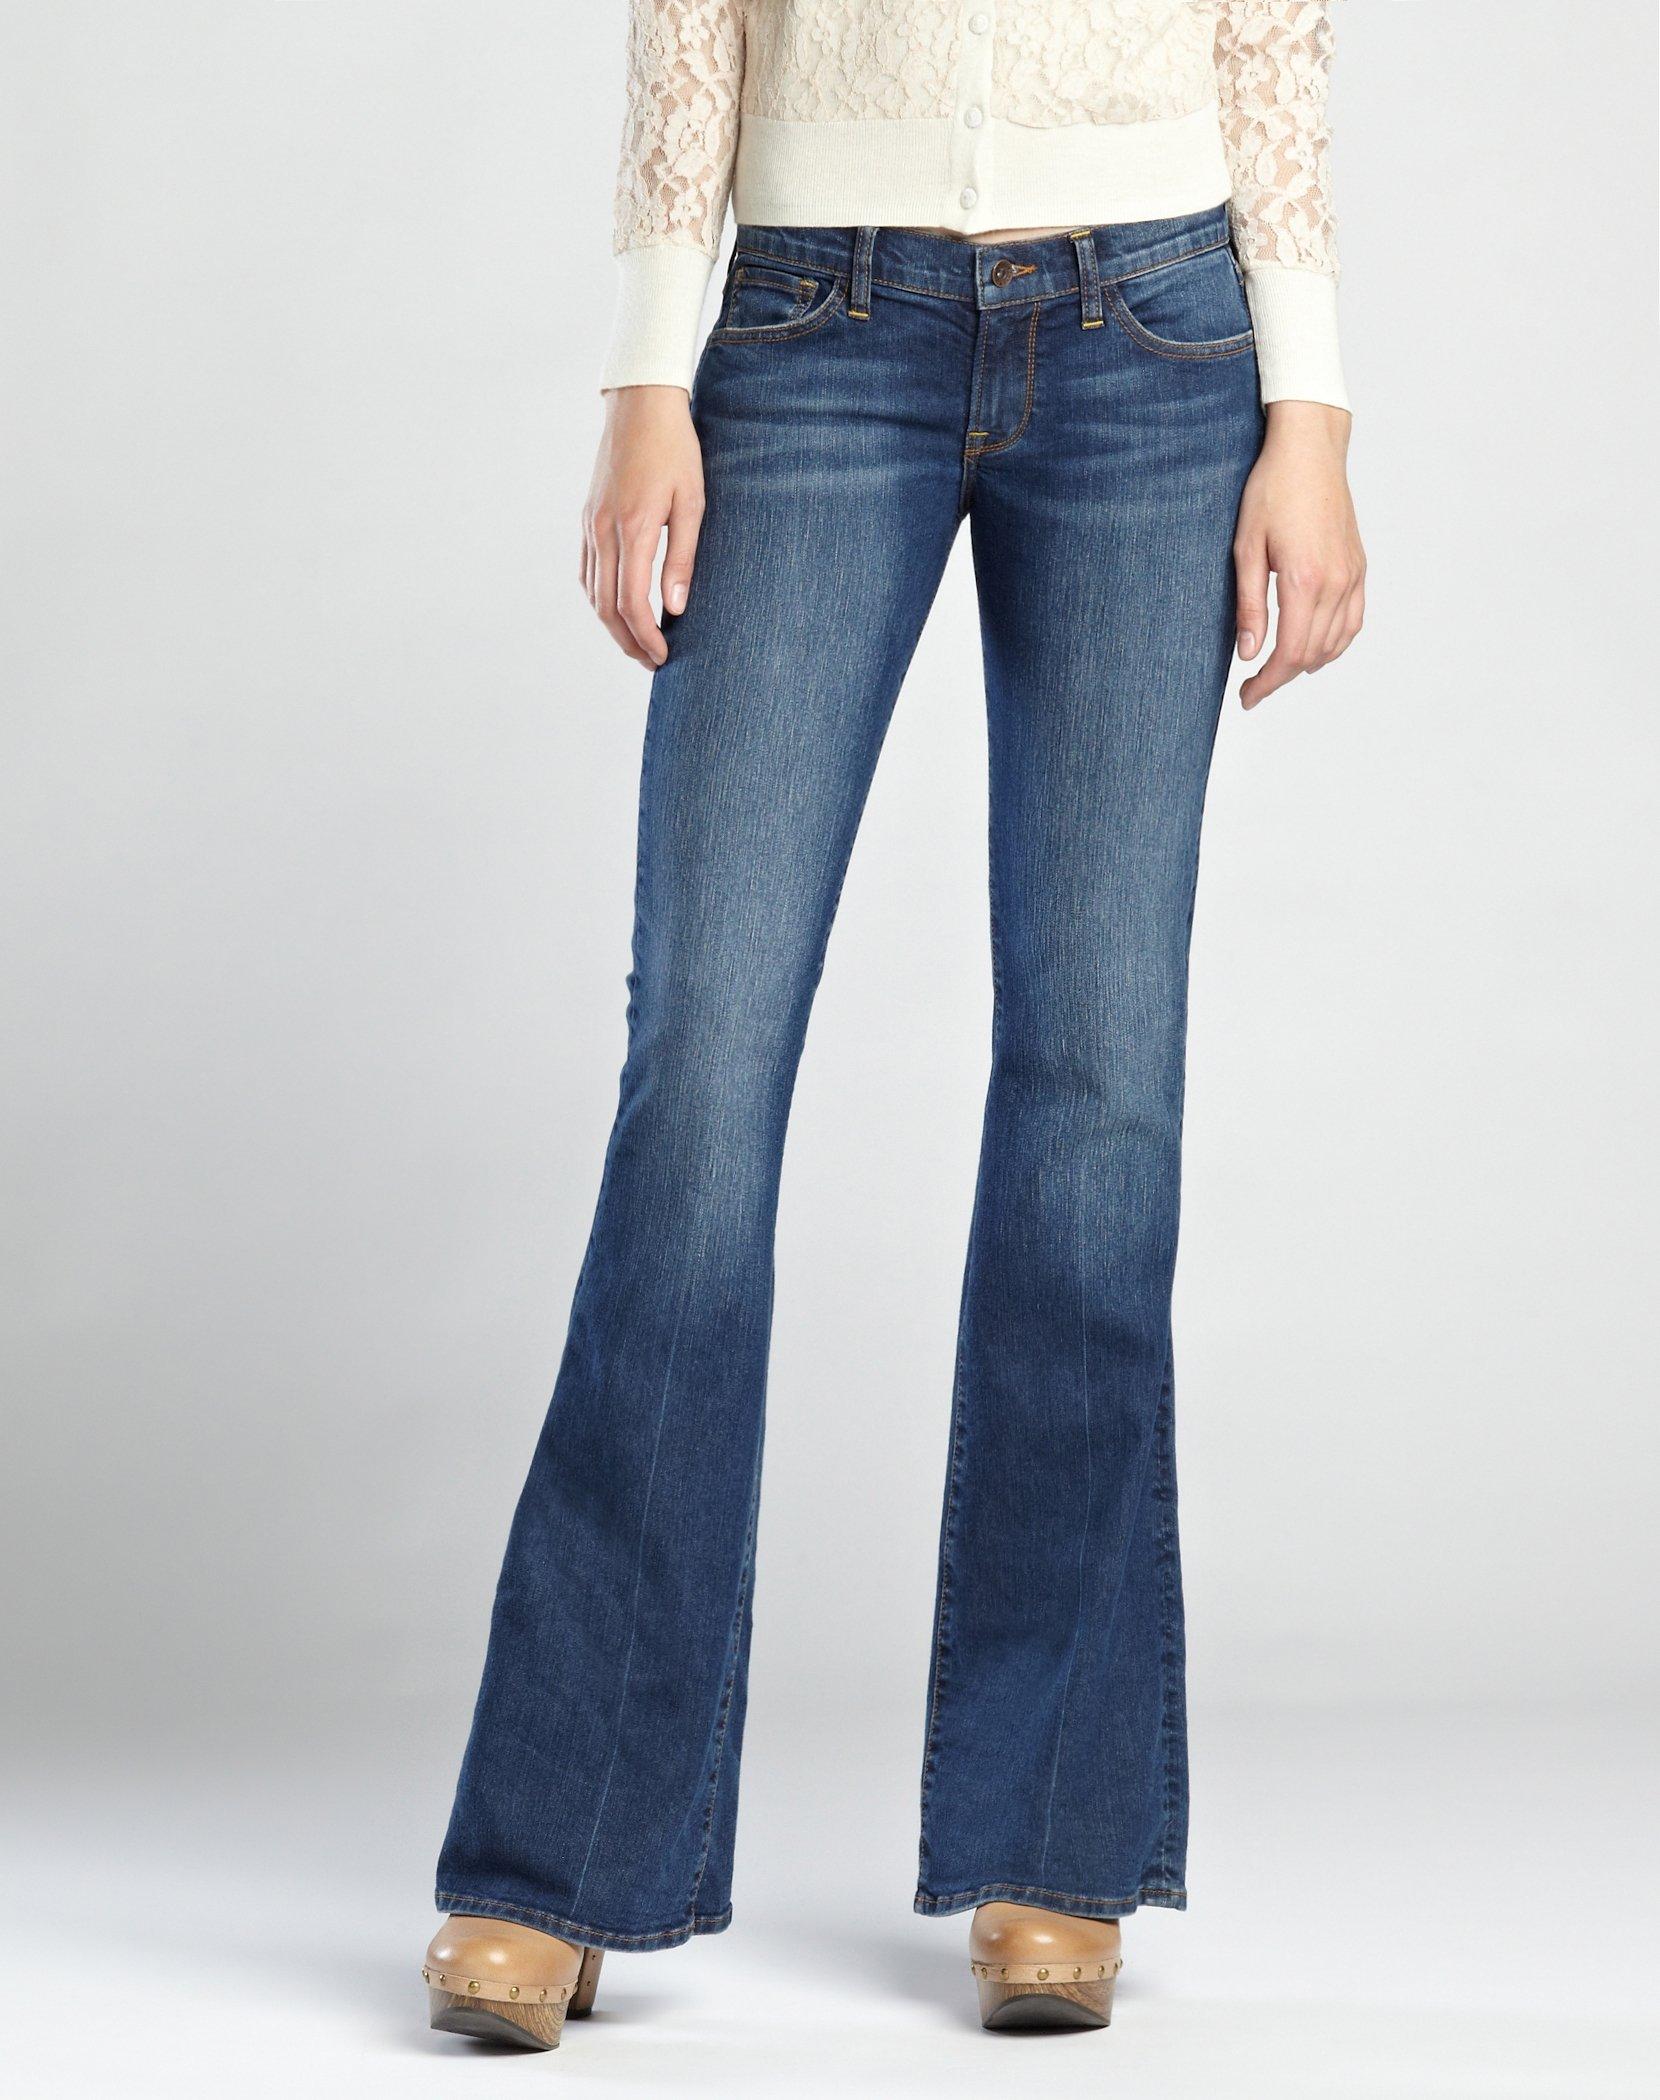 mens white jeans regular fit